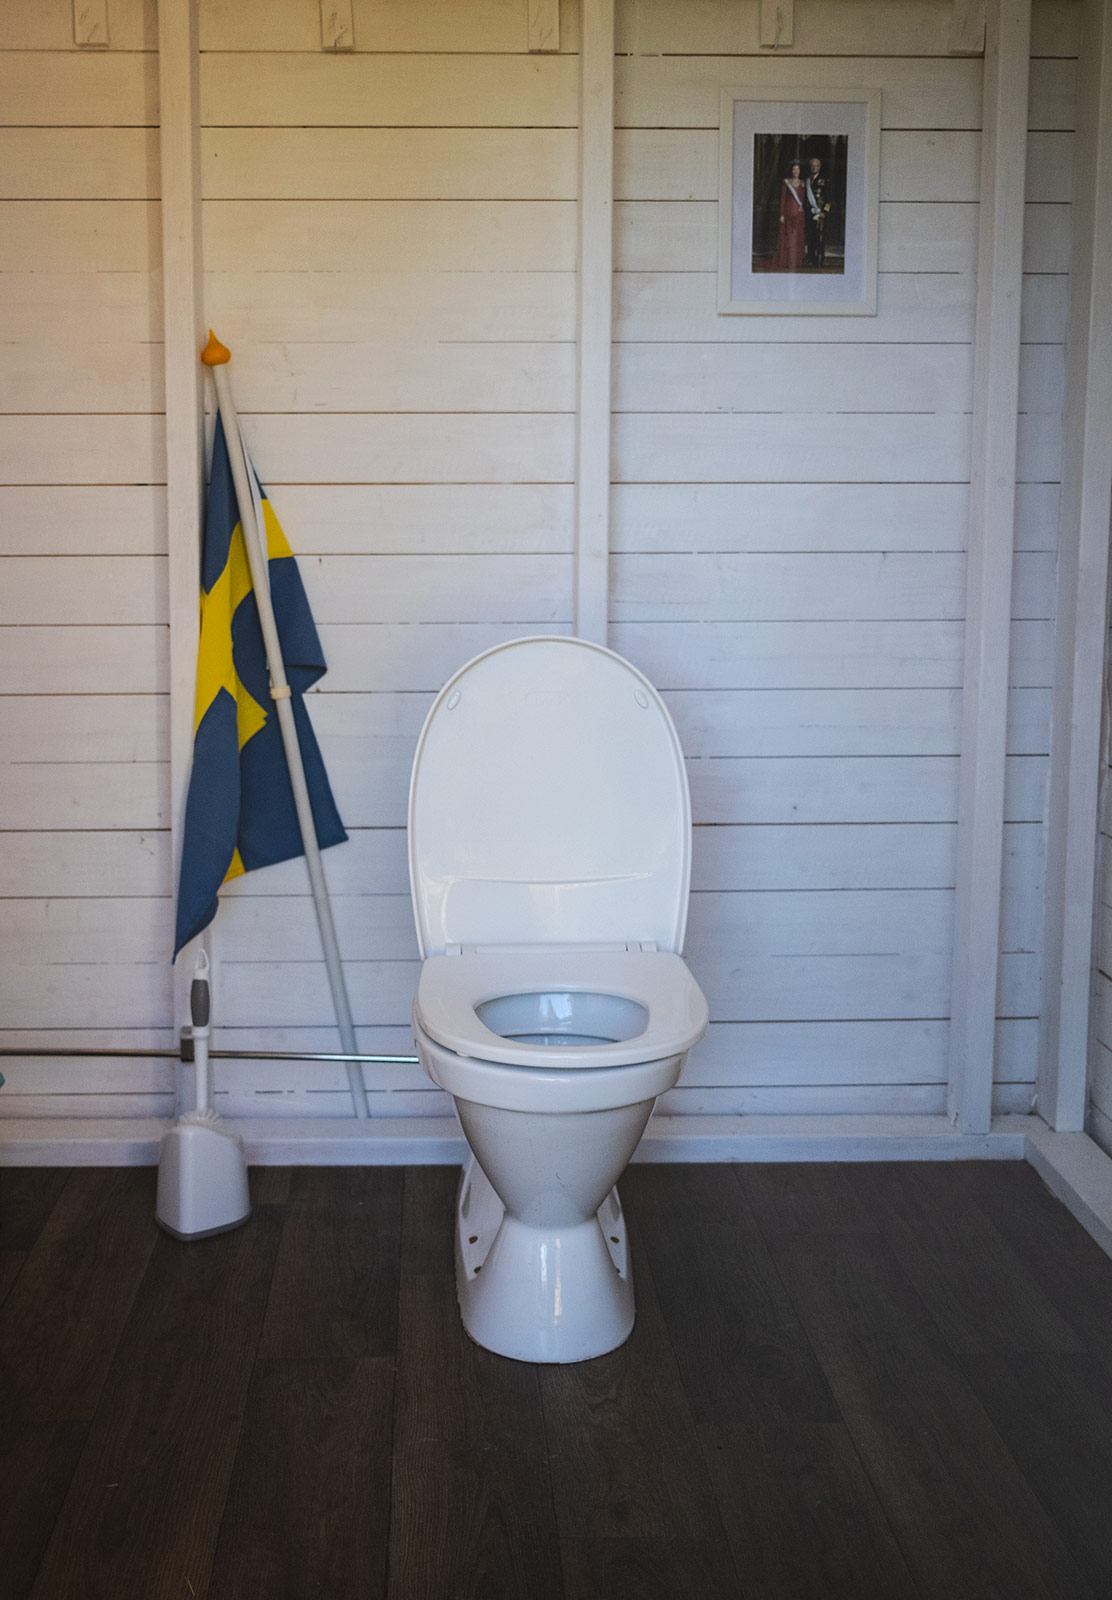 Ceramic toilet with Swedish flag